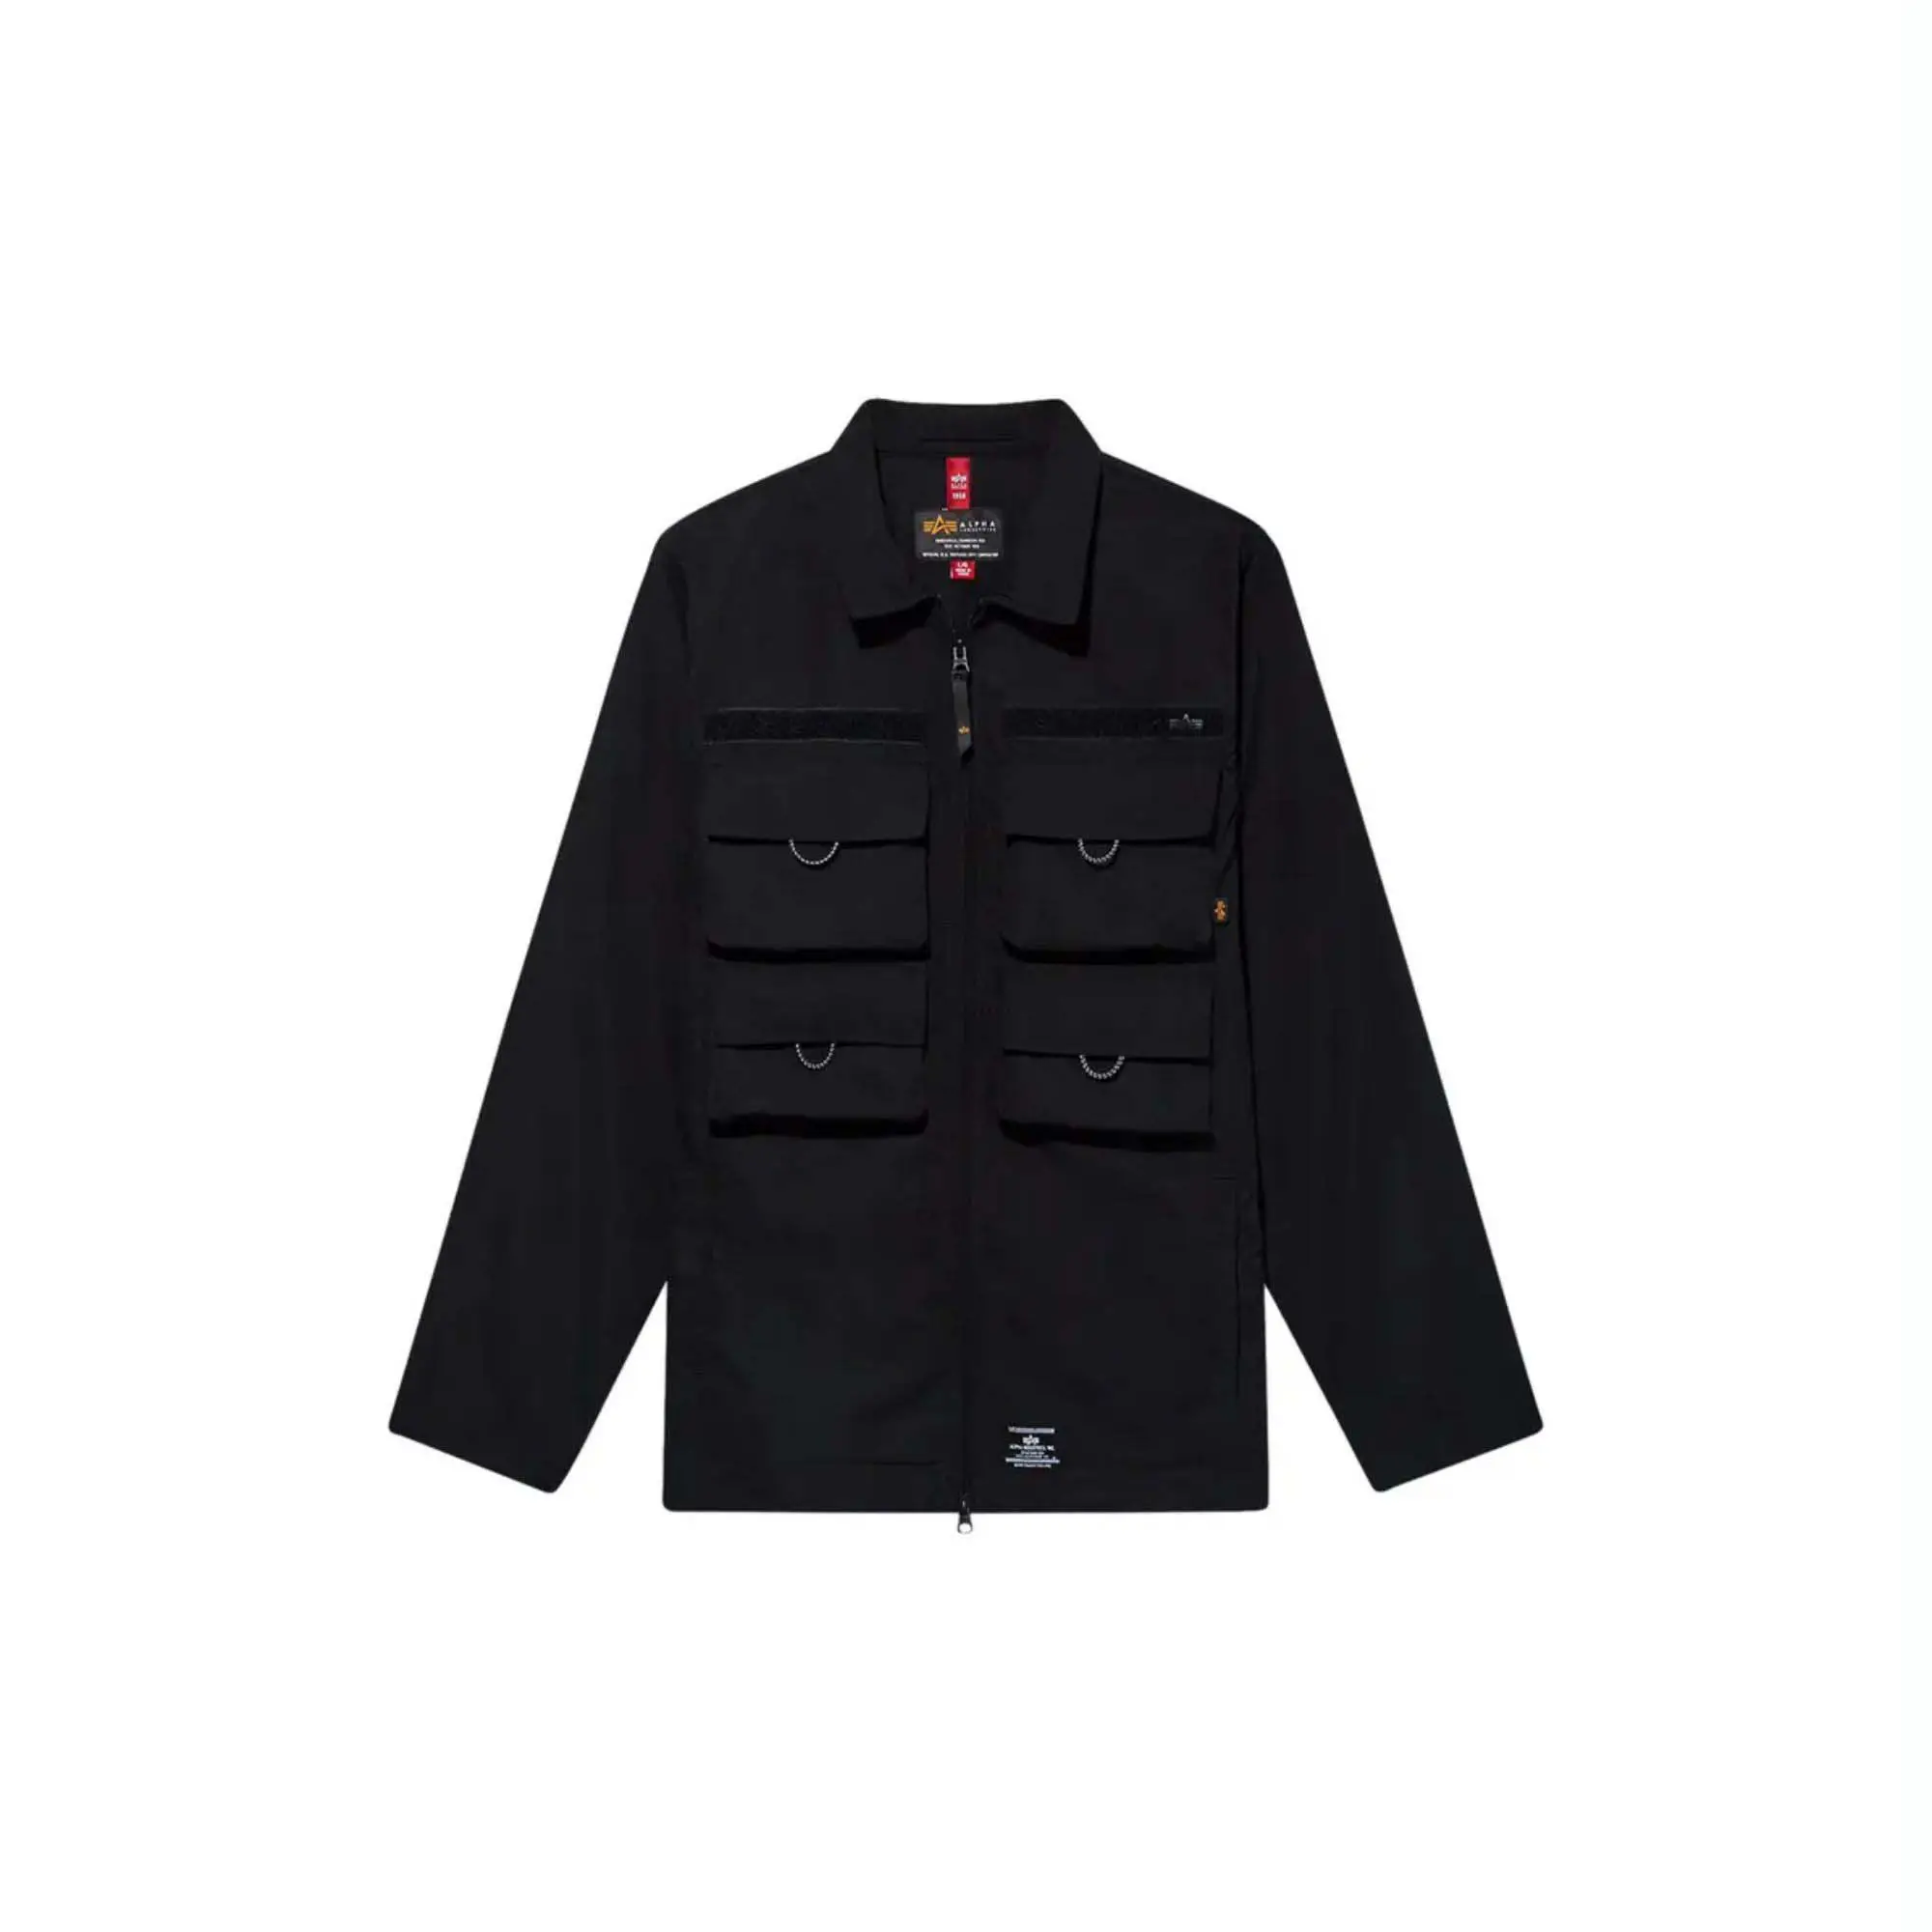 OEM high quality Custom Mens Fashion Casual Streetwear Oversize Thick Shirt Cardigan Shacked Jacket